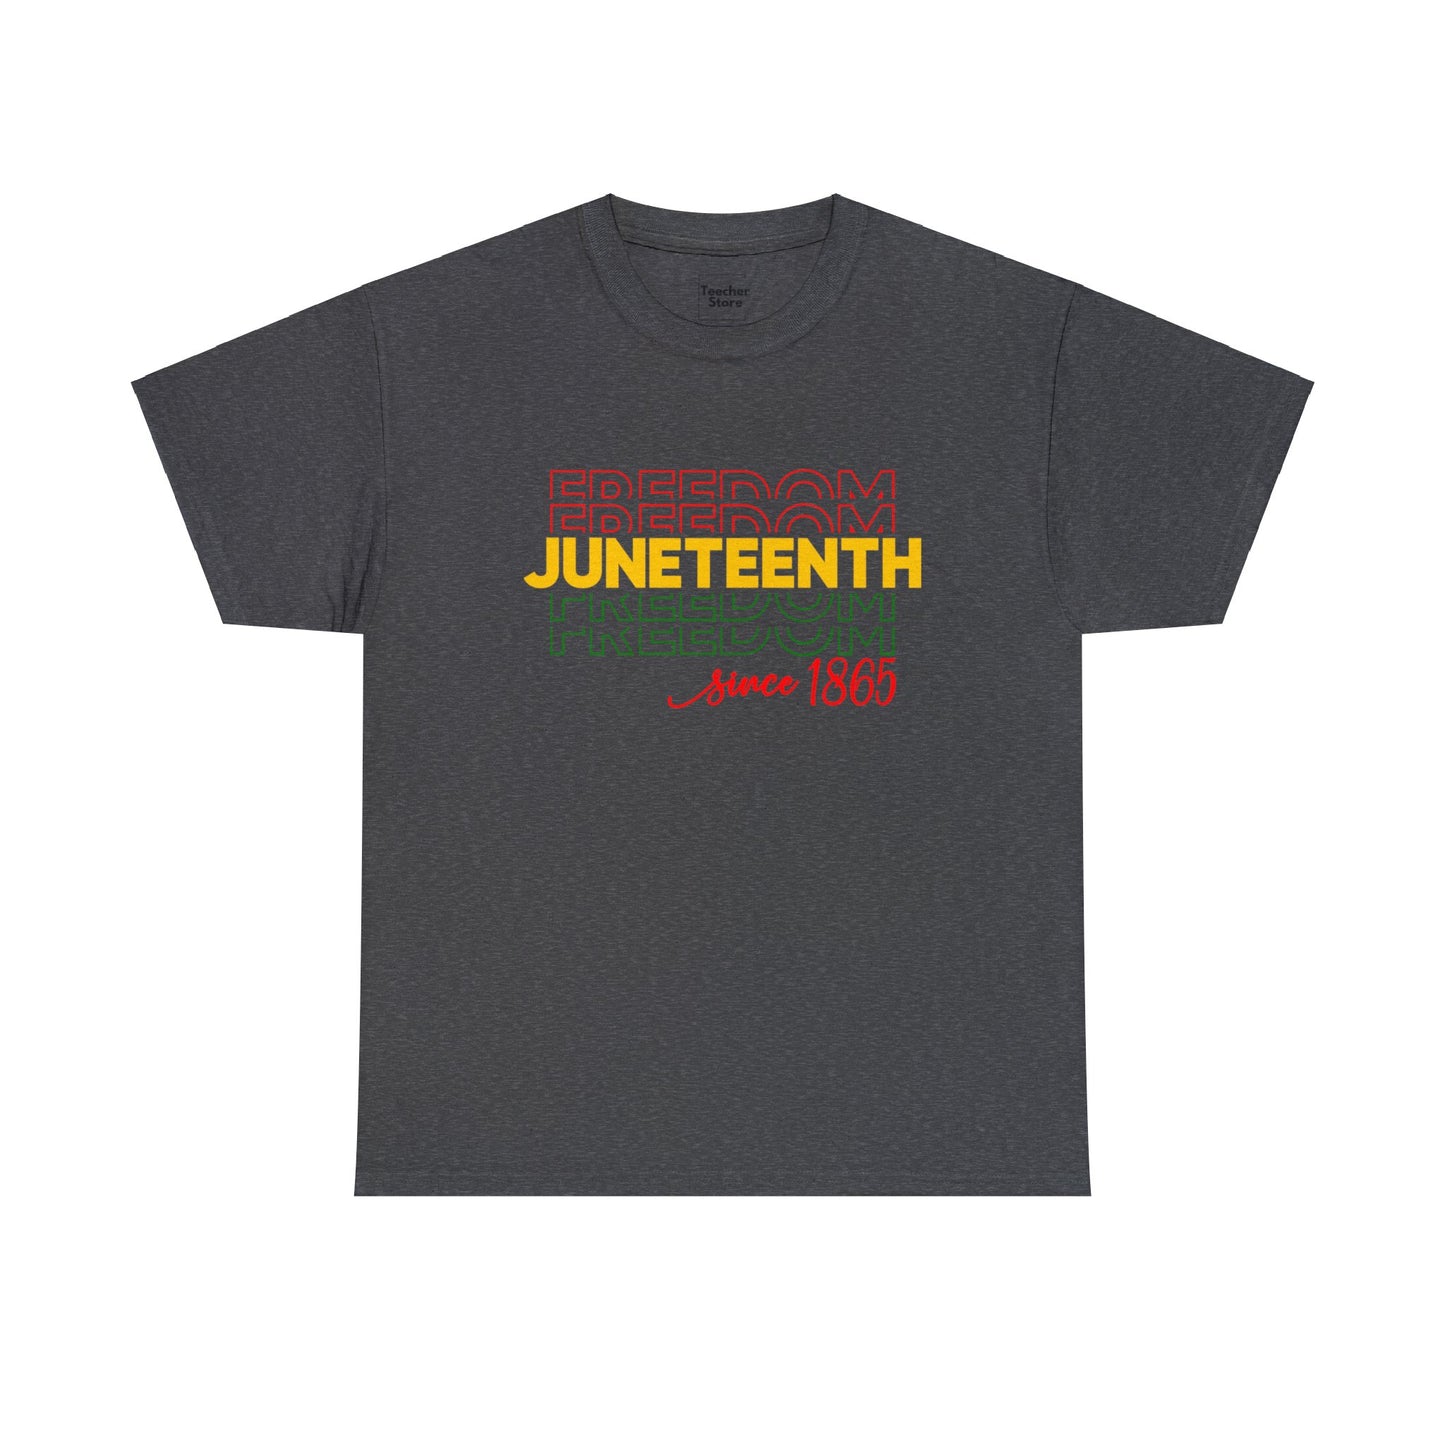 Juneteenth Freedom Tee-Shirt